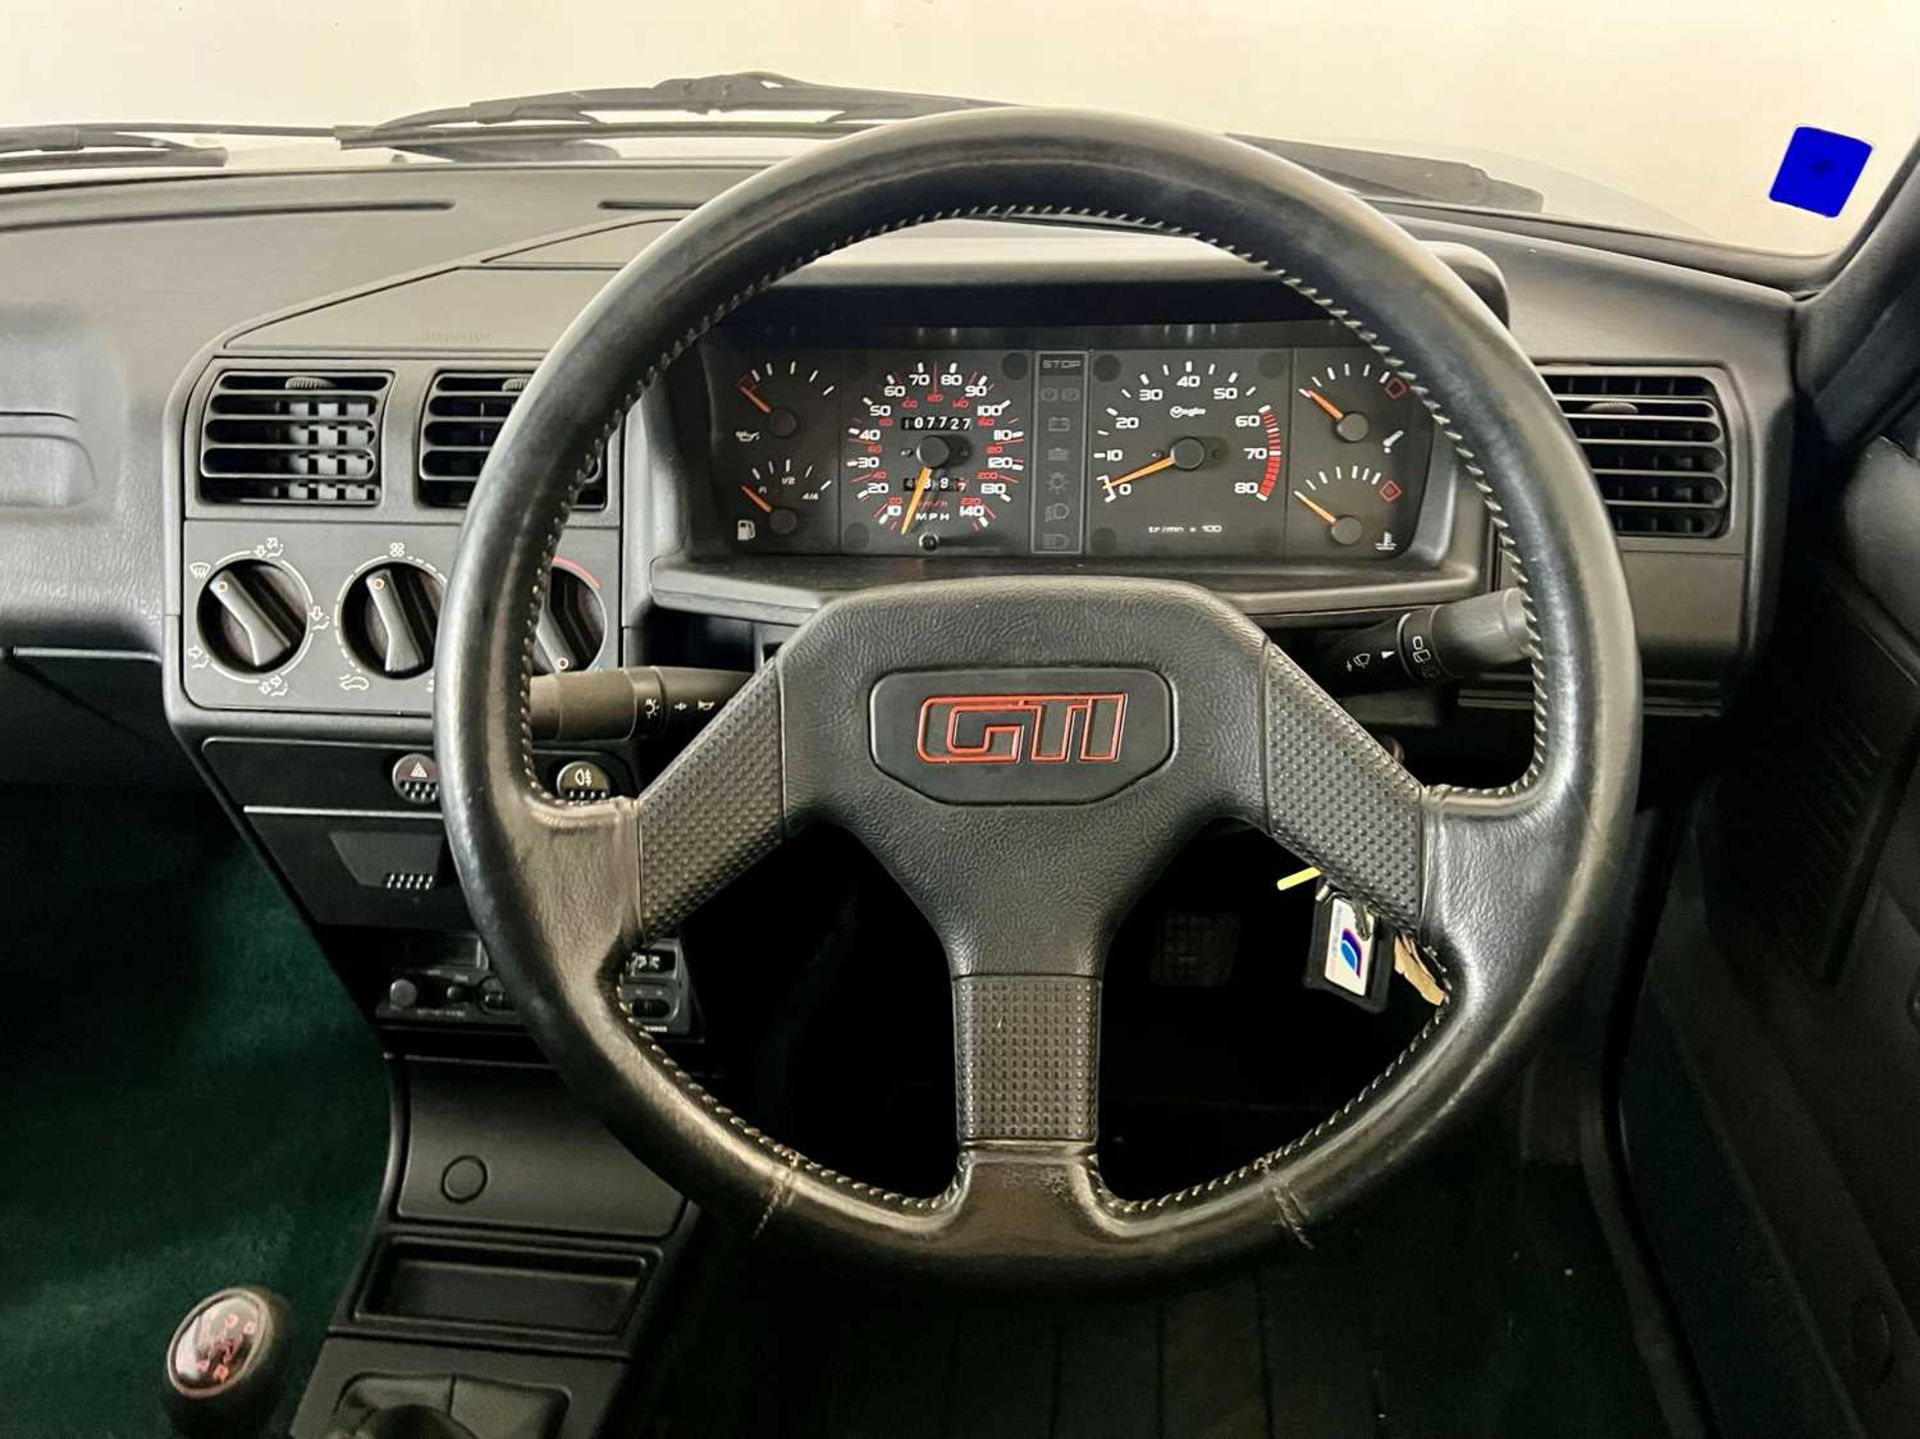 1991 Peugeot 205 GTI - Image 27 of 31